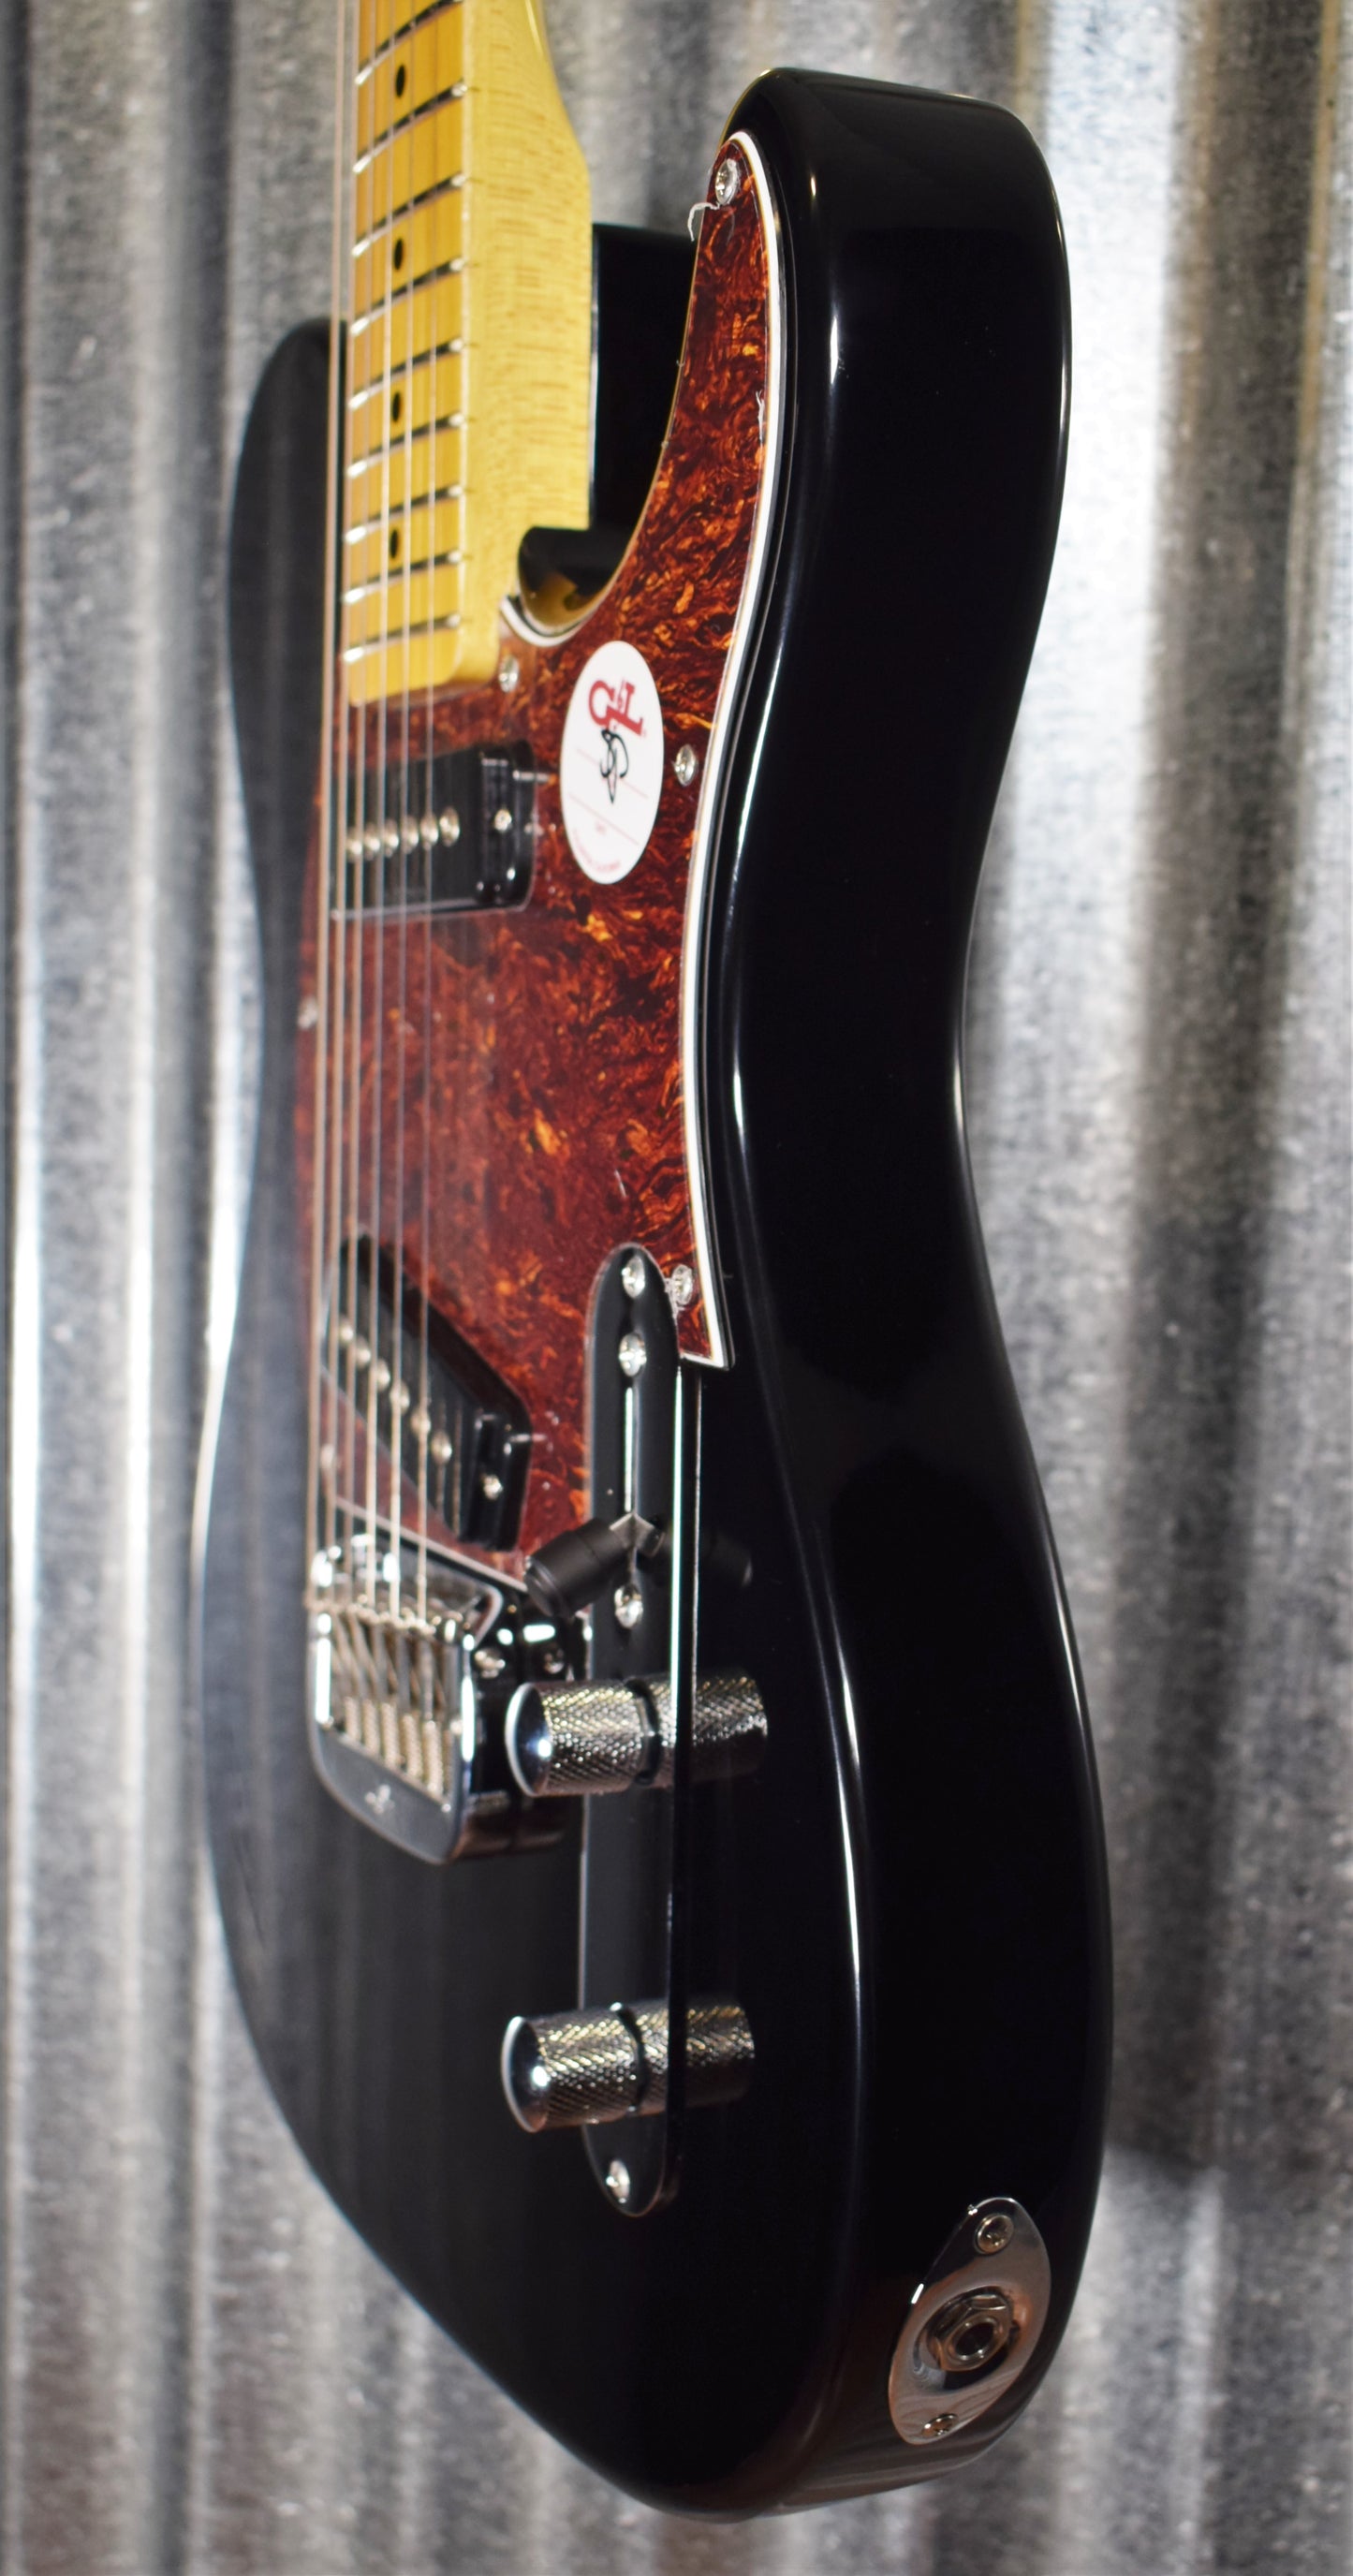 G&L Tribute ASAT Special Black Guitar #0870